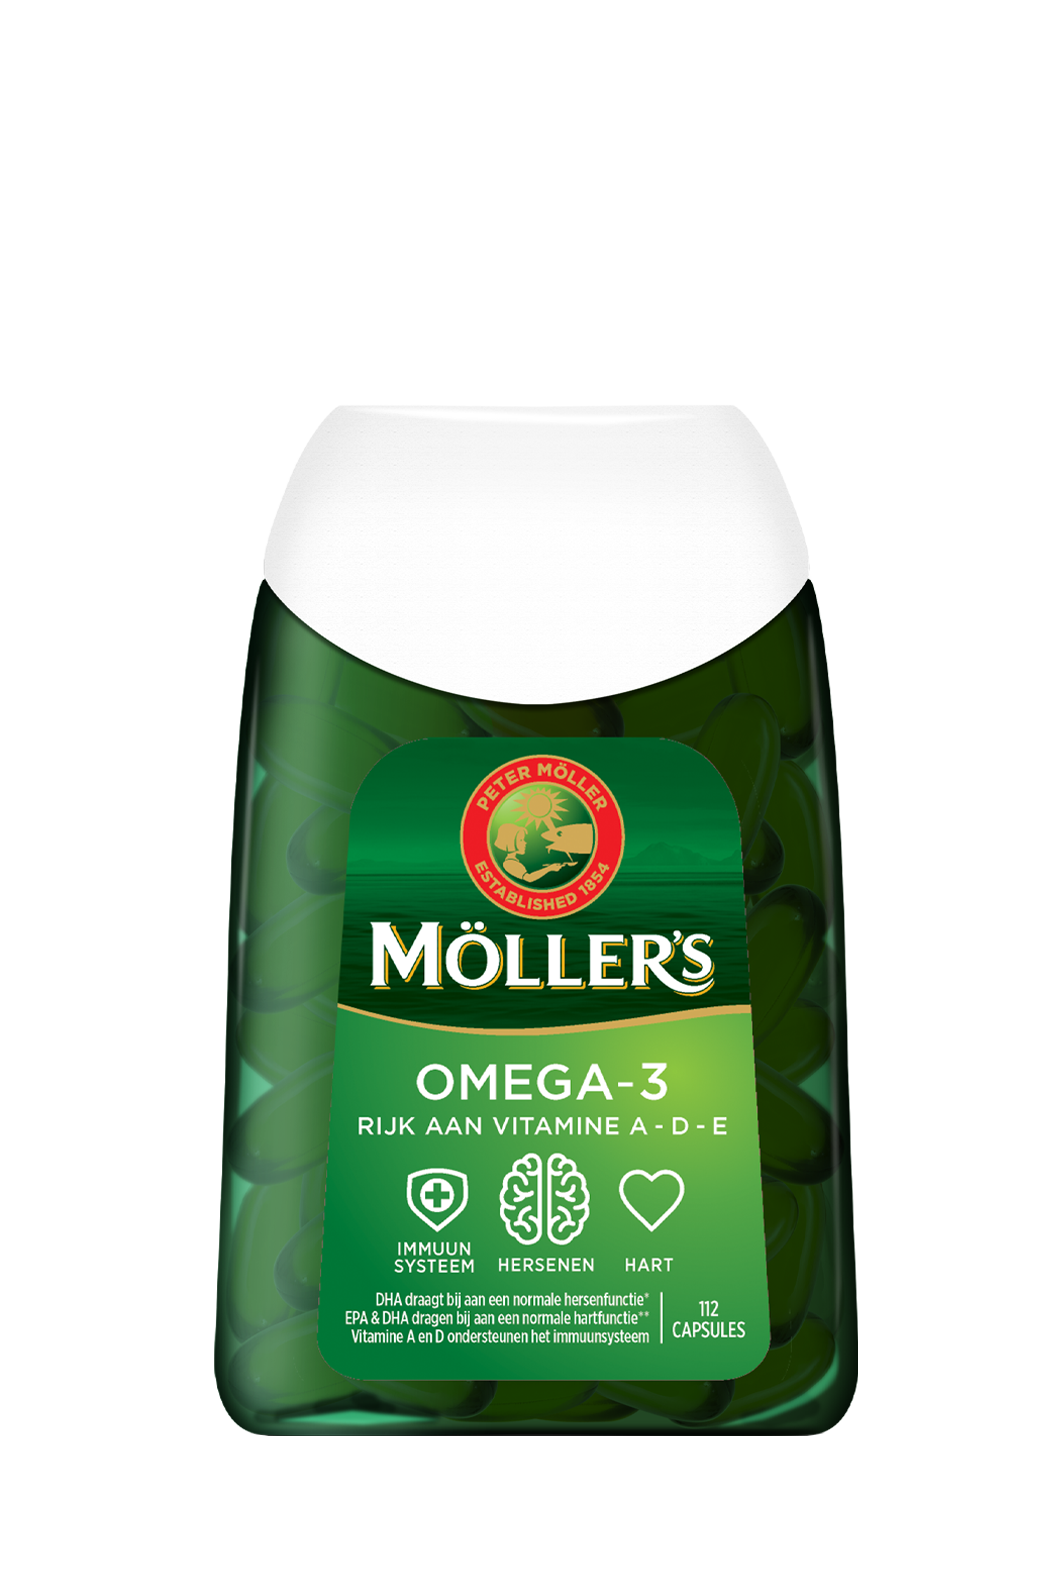 MOLLER OMEGA-3 DOBBEL FISH OIL CAPS N90 (ORKLA CARE)